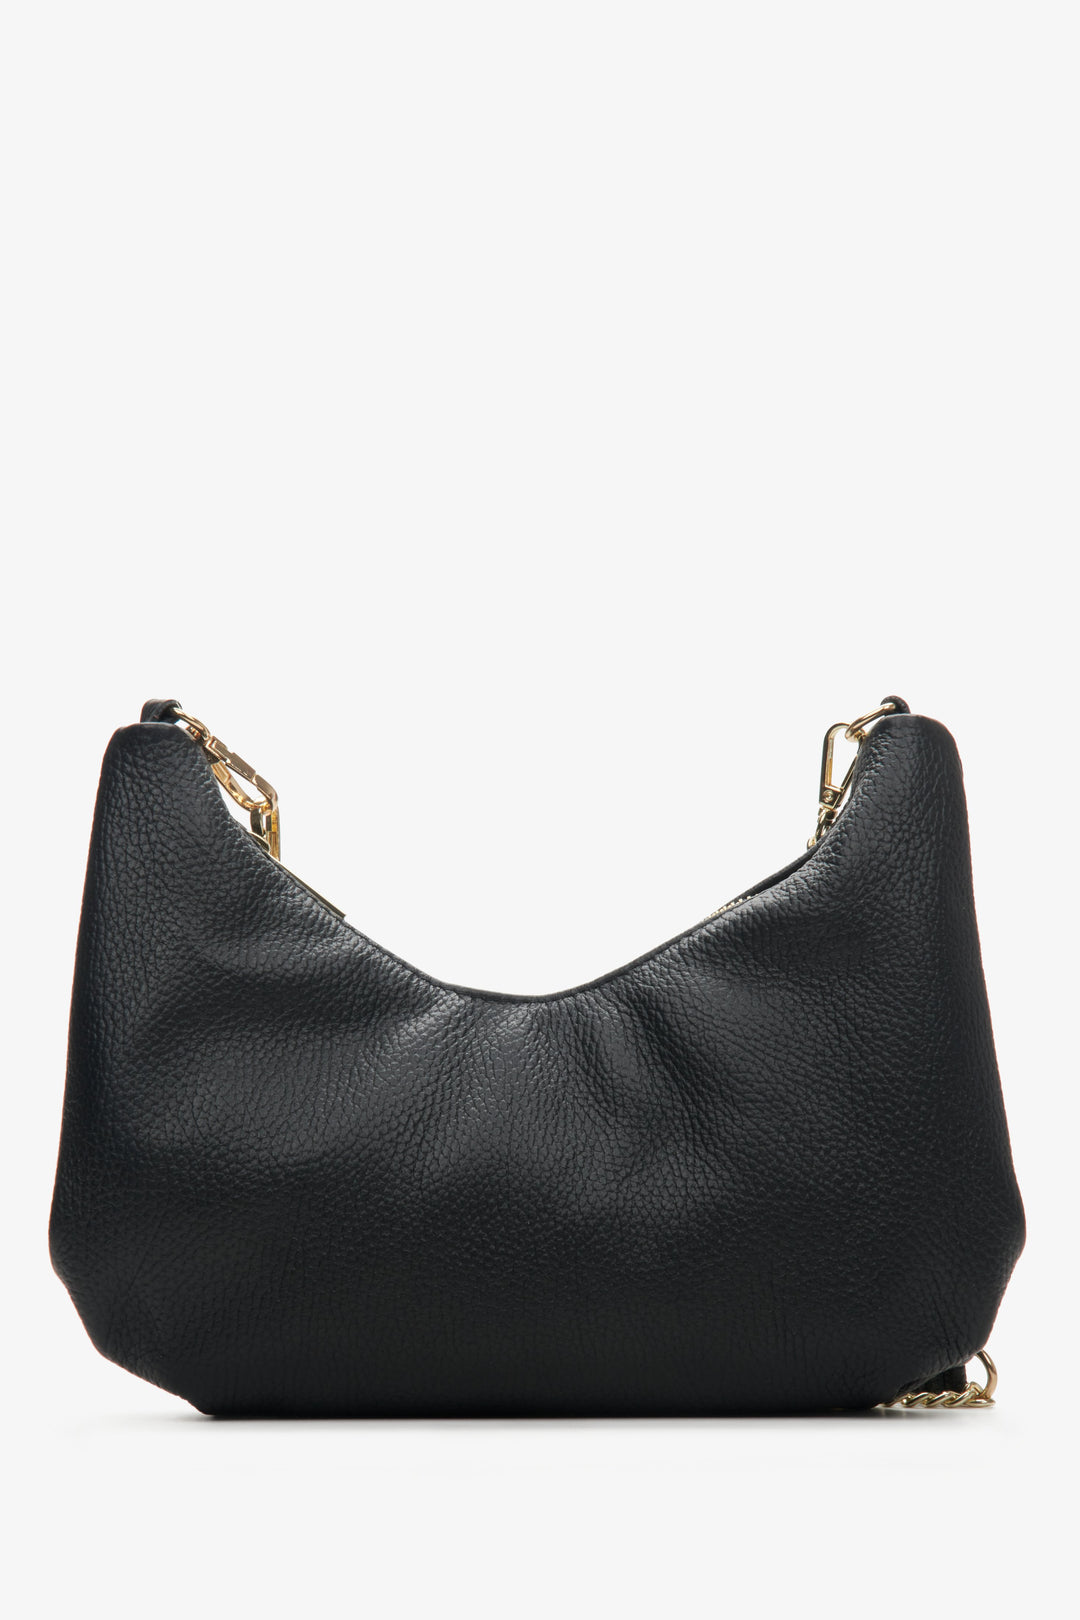 Estro women's leather handbag in black colour.